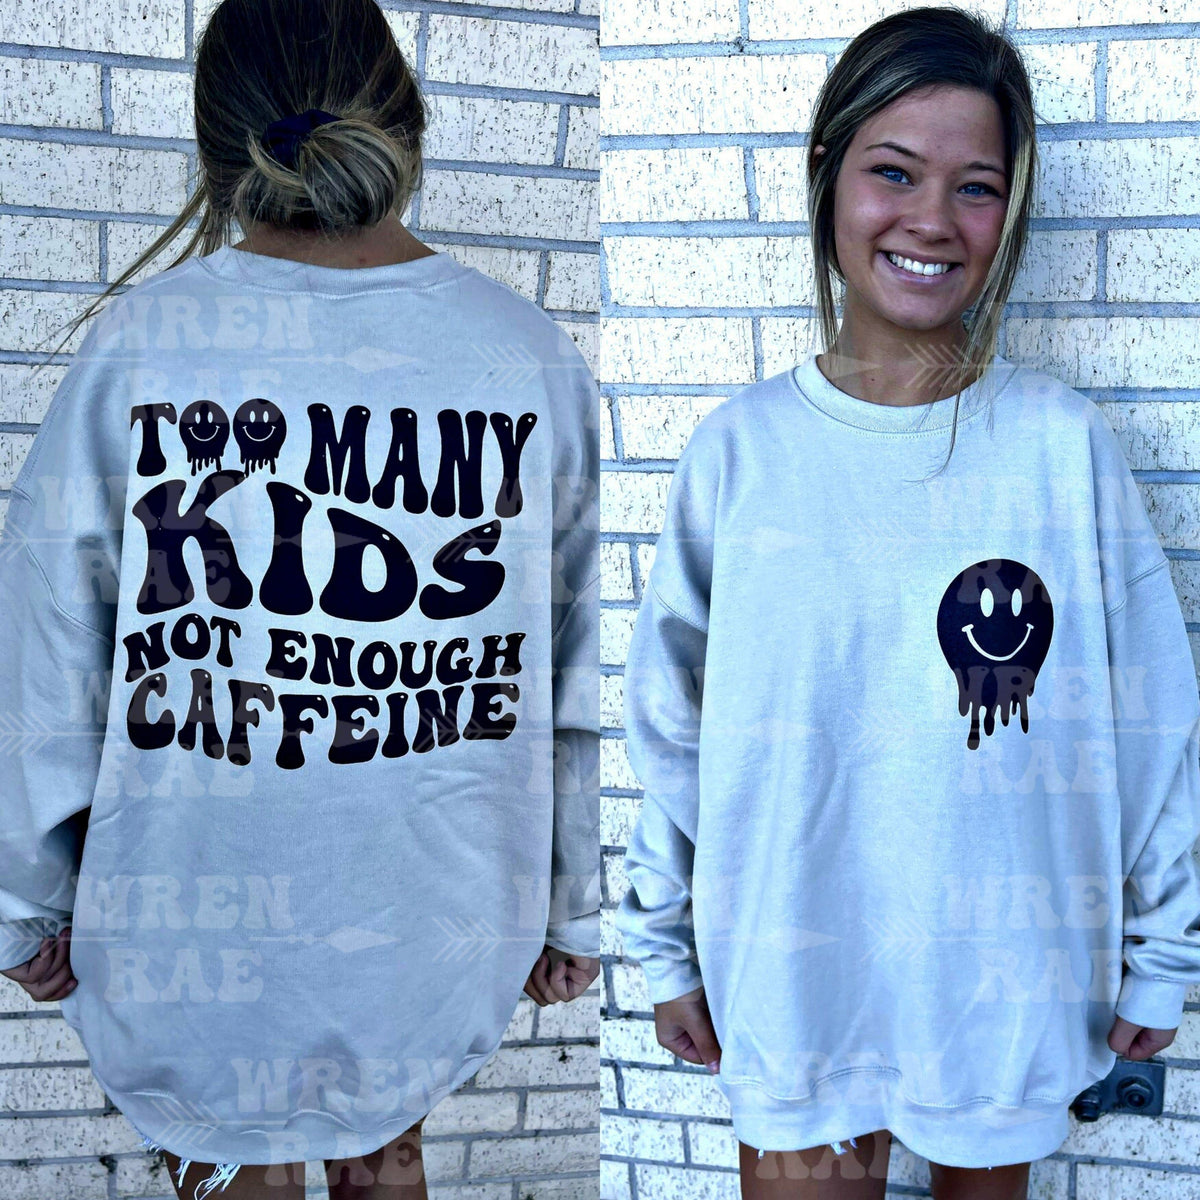 Too Many Kids Not enough Caffeine Tee or sweatshirt